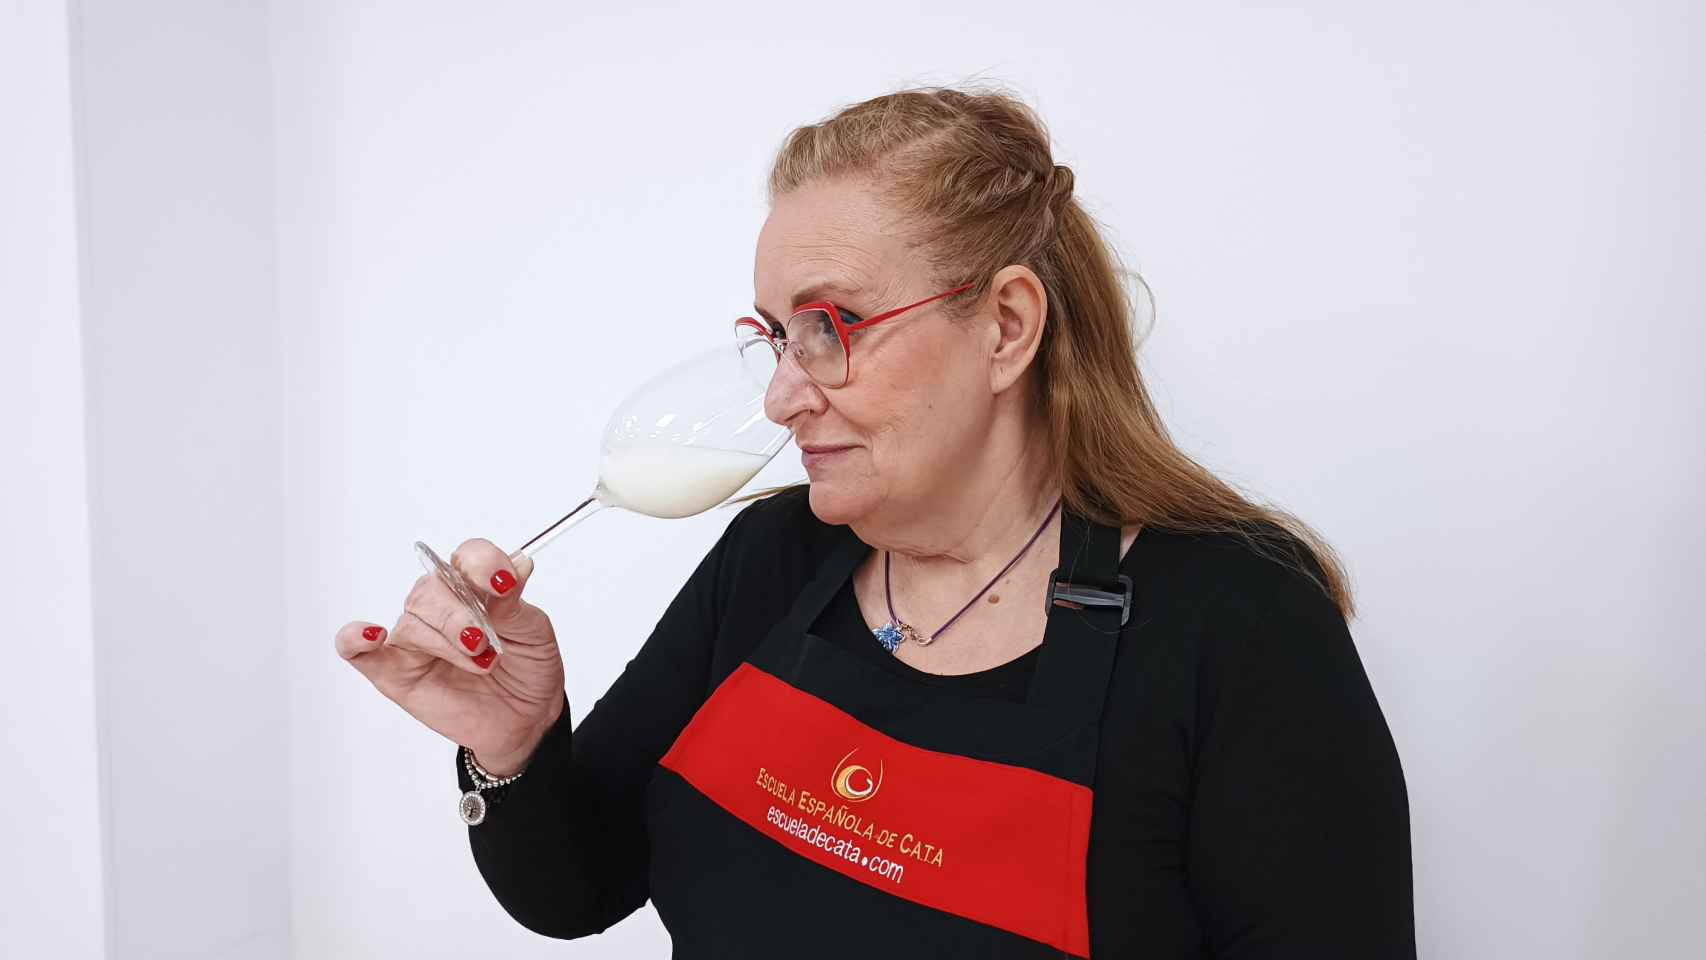 La analista sensorial, Carmen Garrobo, oliendo una de las leches durante la cata.